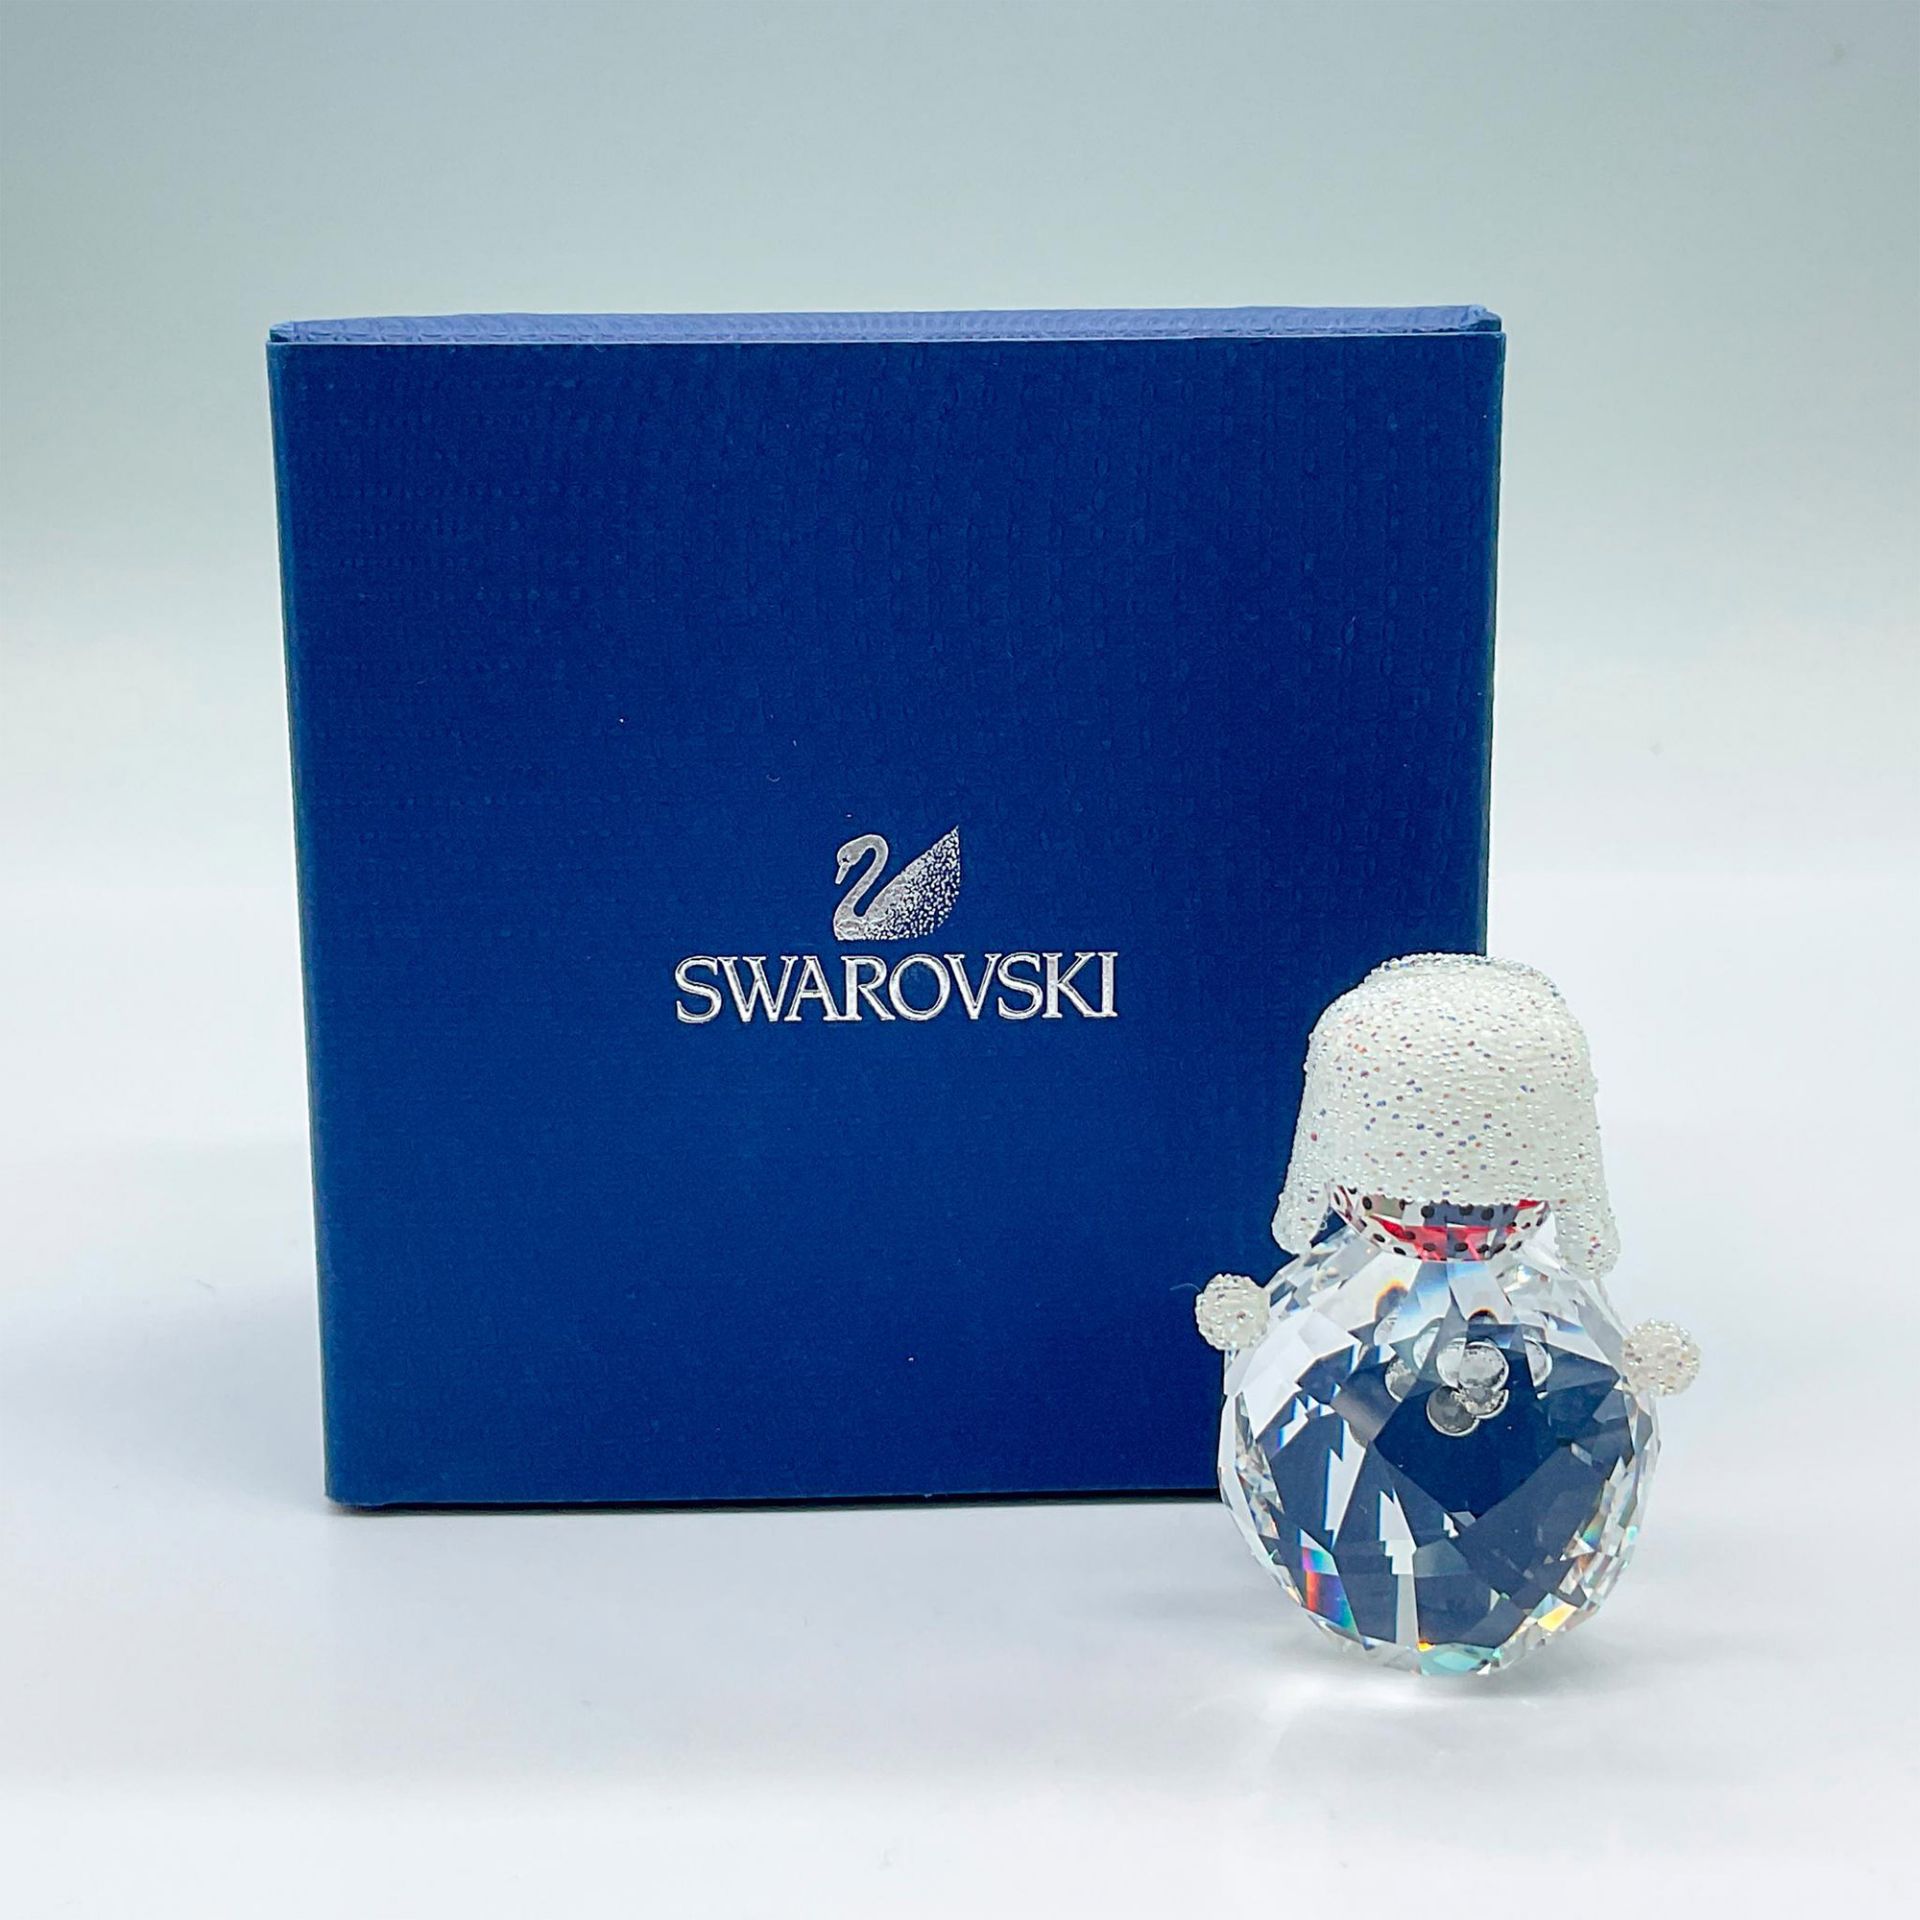 Swarovski Crystal Figurine, Snowman - Image 2 of 3